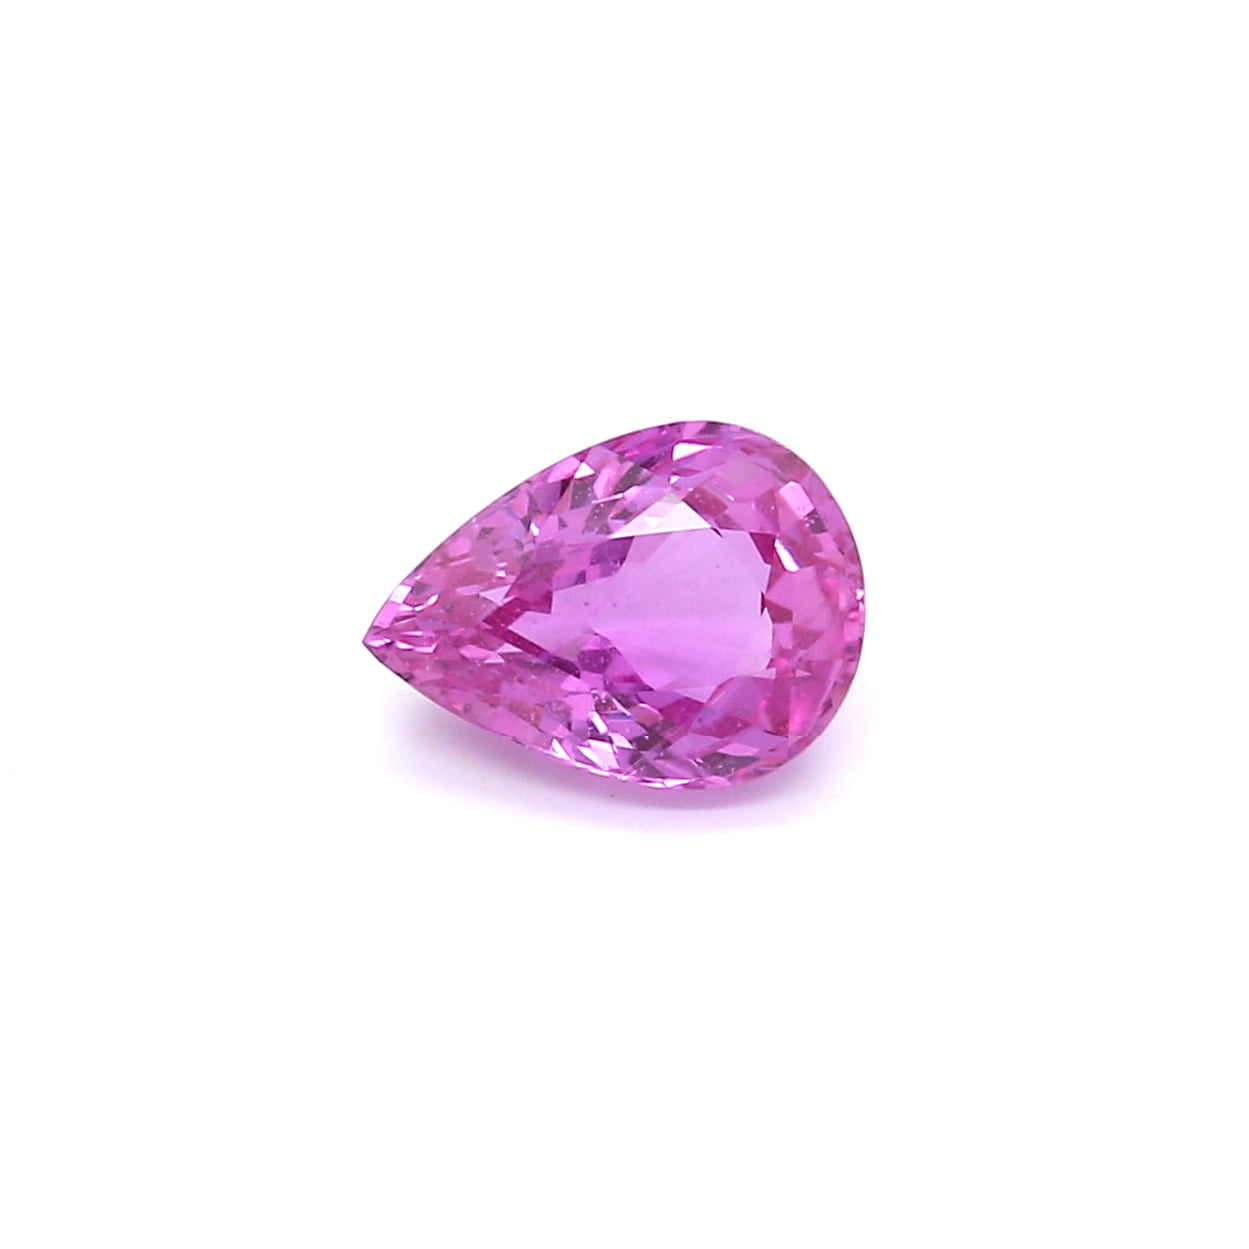 1.87ct Purplish Pink, Pear Shape Sapphire, Heated, Madagascar - 8.87 x 6.51 x 4.19mm